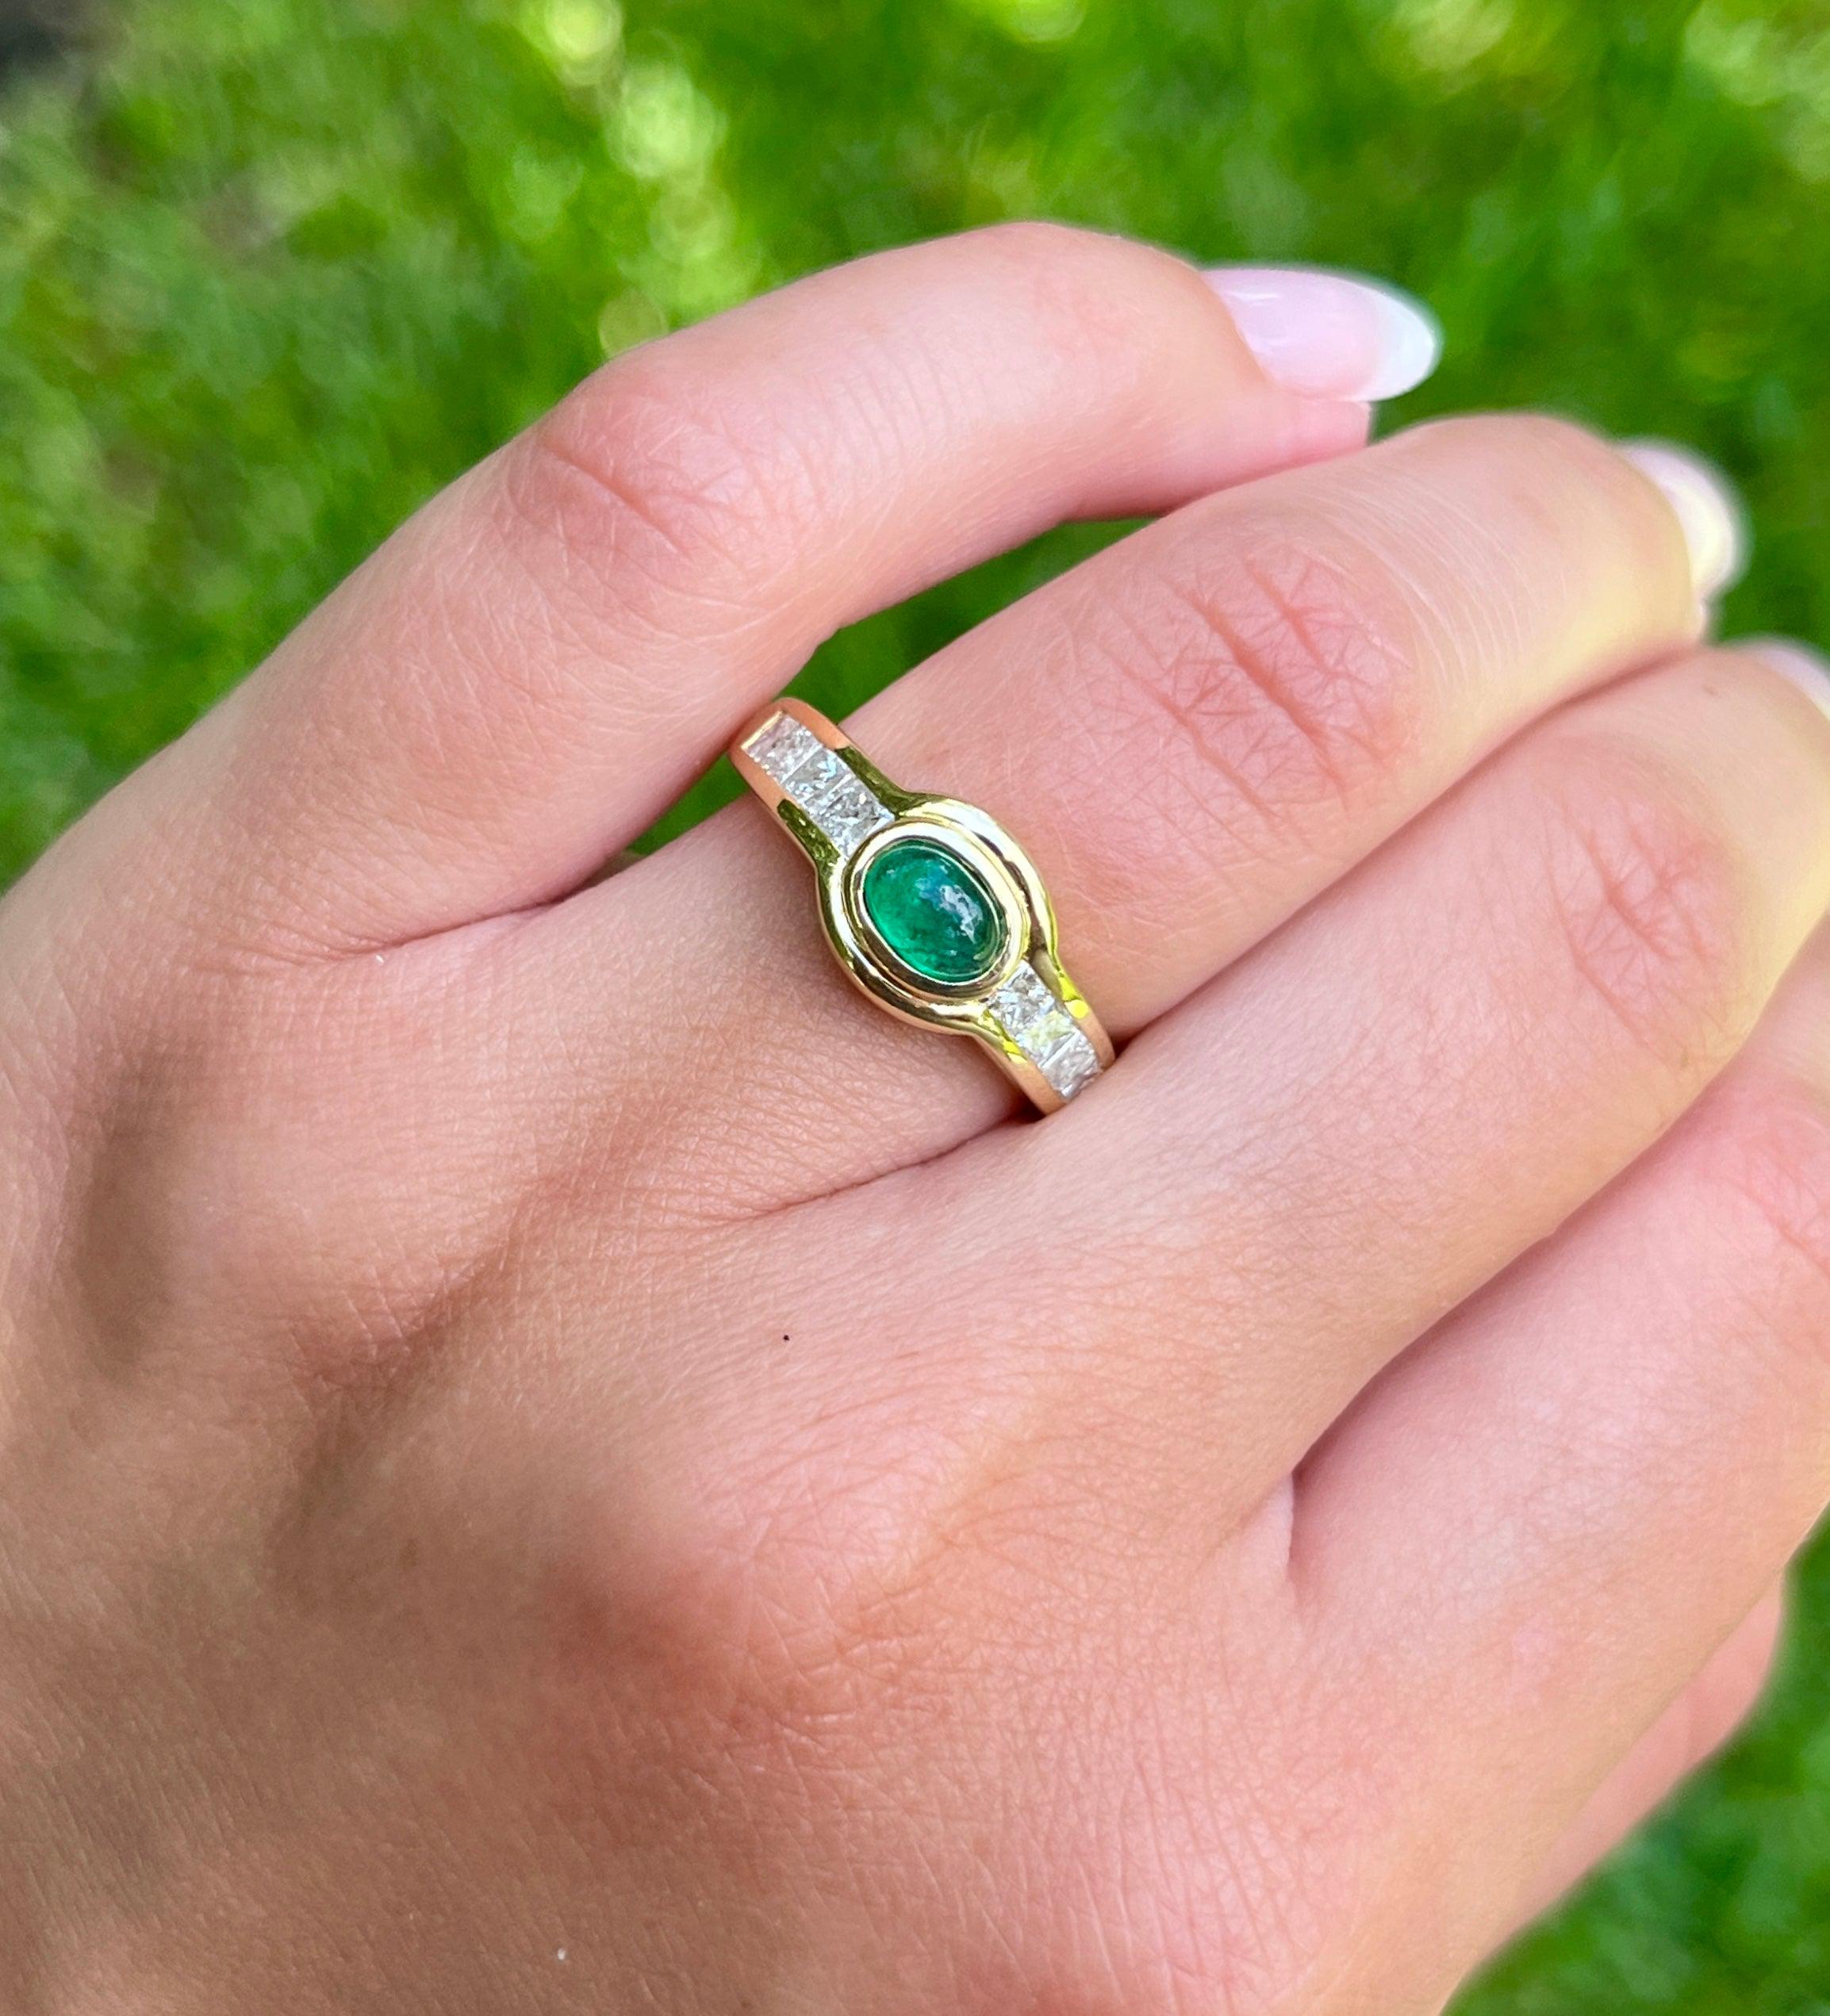 Natural-Emerald-Bezel-Set-Cabochon-Cut-Ring-With-Princess-Cut-Diamonds-in-18K-Yellow-Gold-Rings-2.jpg